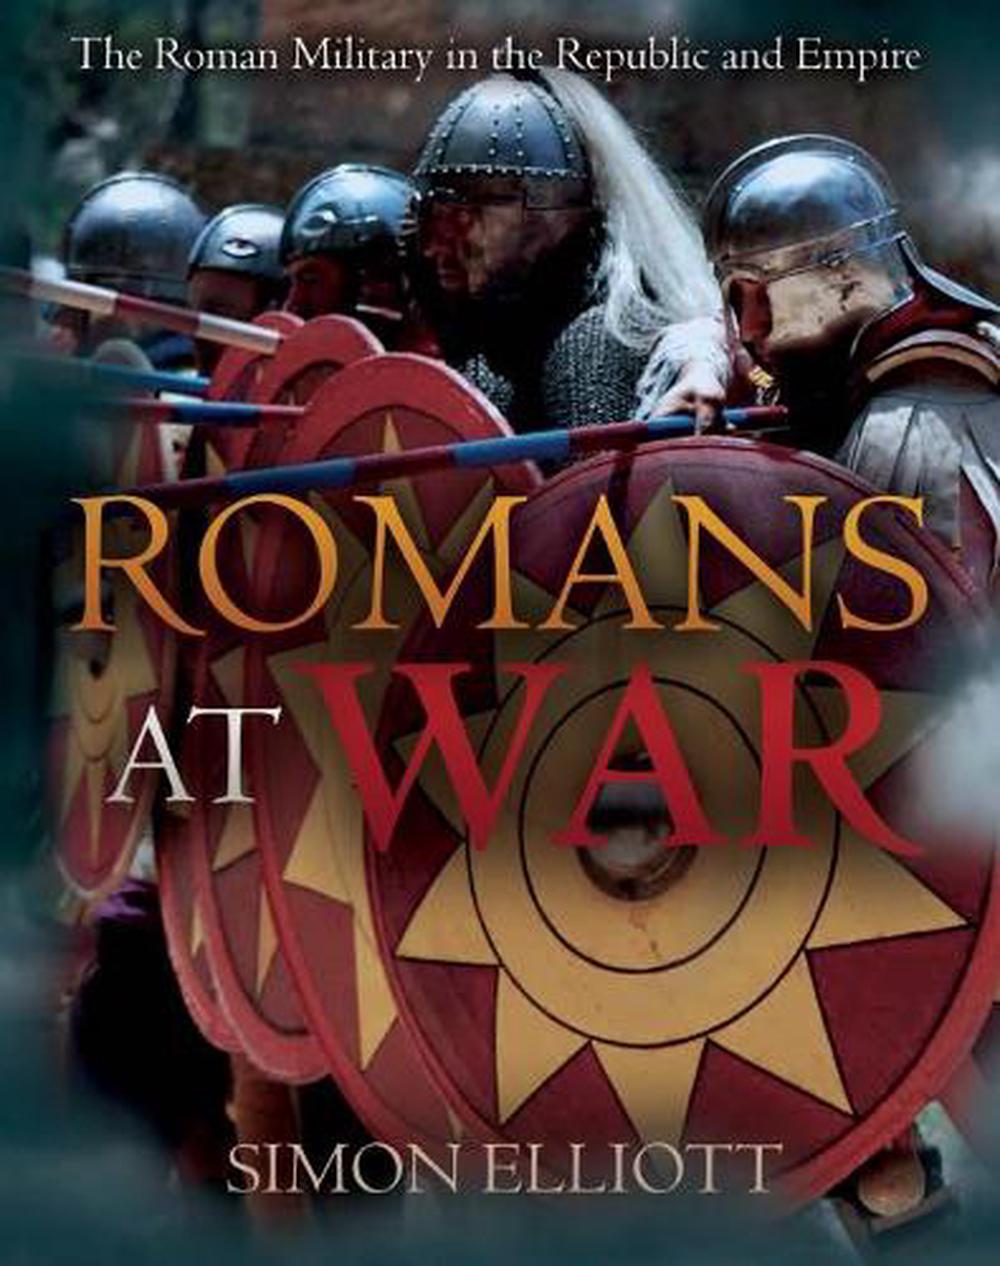 Roman Empire Free download the last version for apple